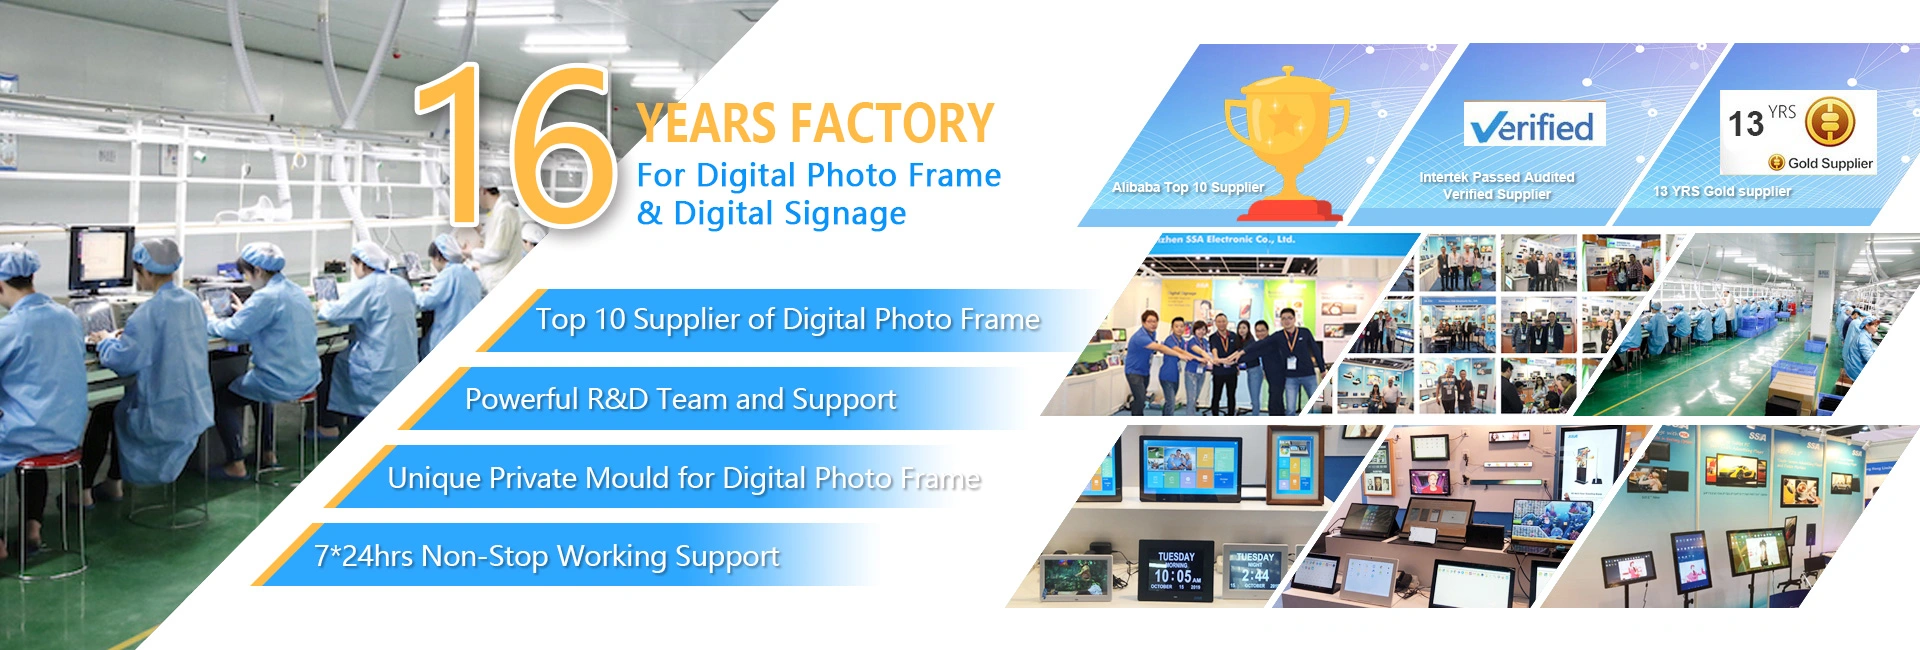  #1 FRAMEO Wifi Digital Photo Frame Supplier | Digital Signage Manufacturer, SSA 16 Years OEM Factory   